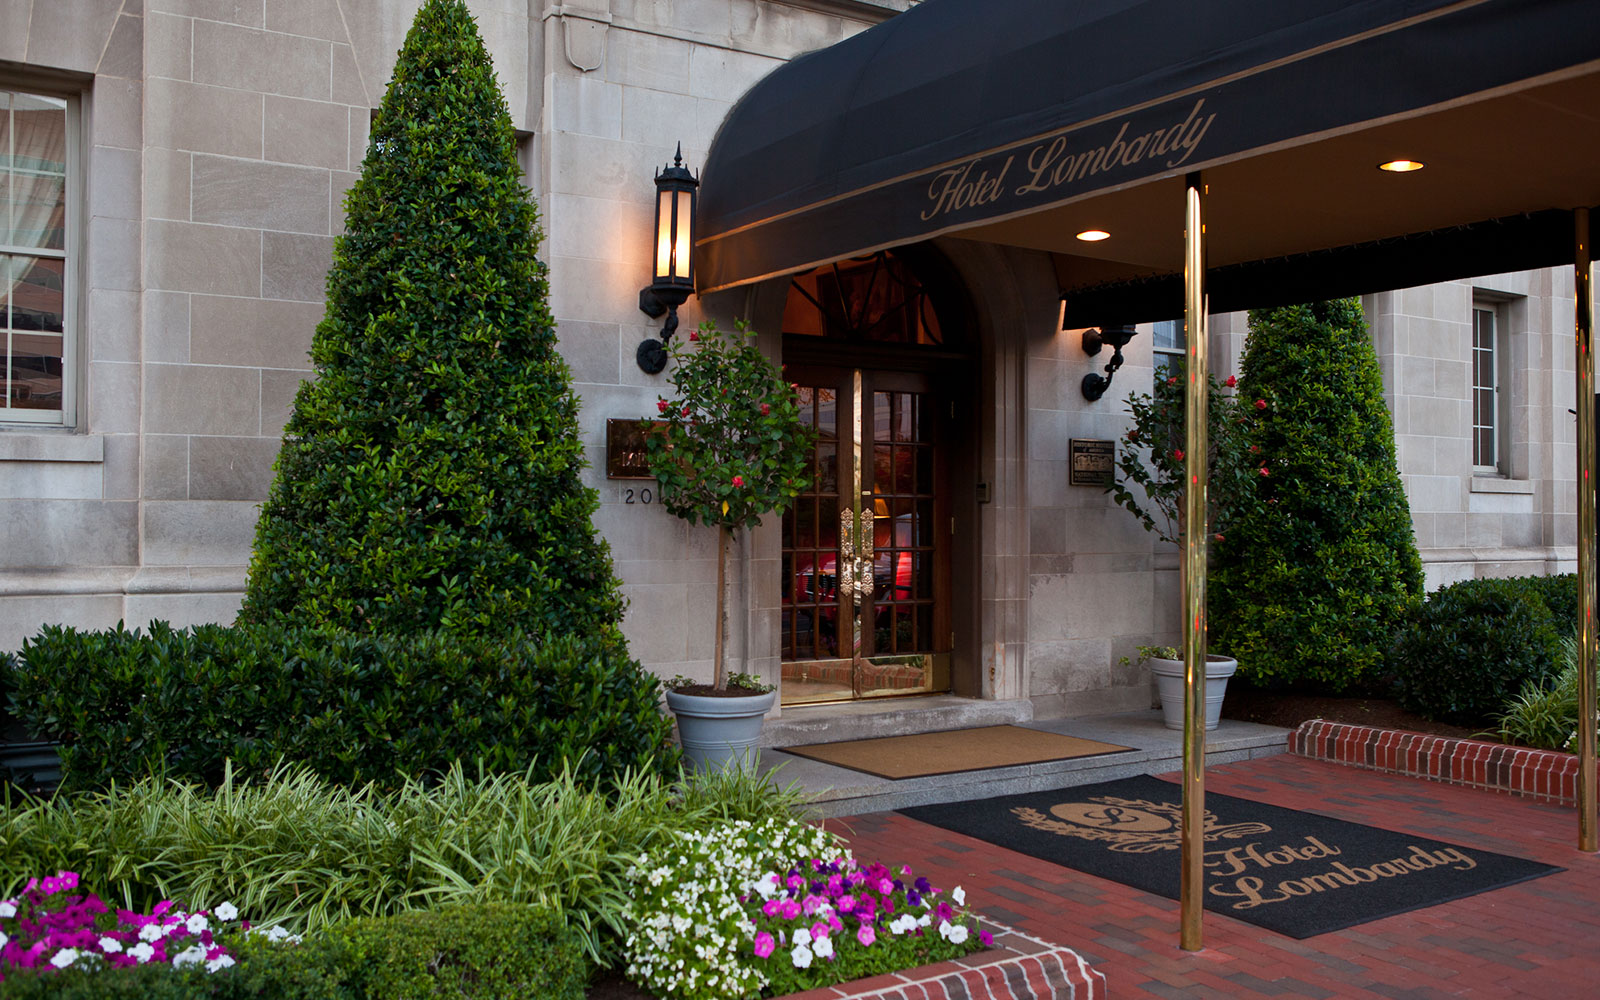 Hotel Lombardy, Washington D.C.